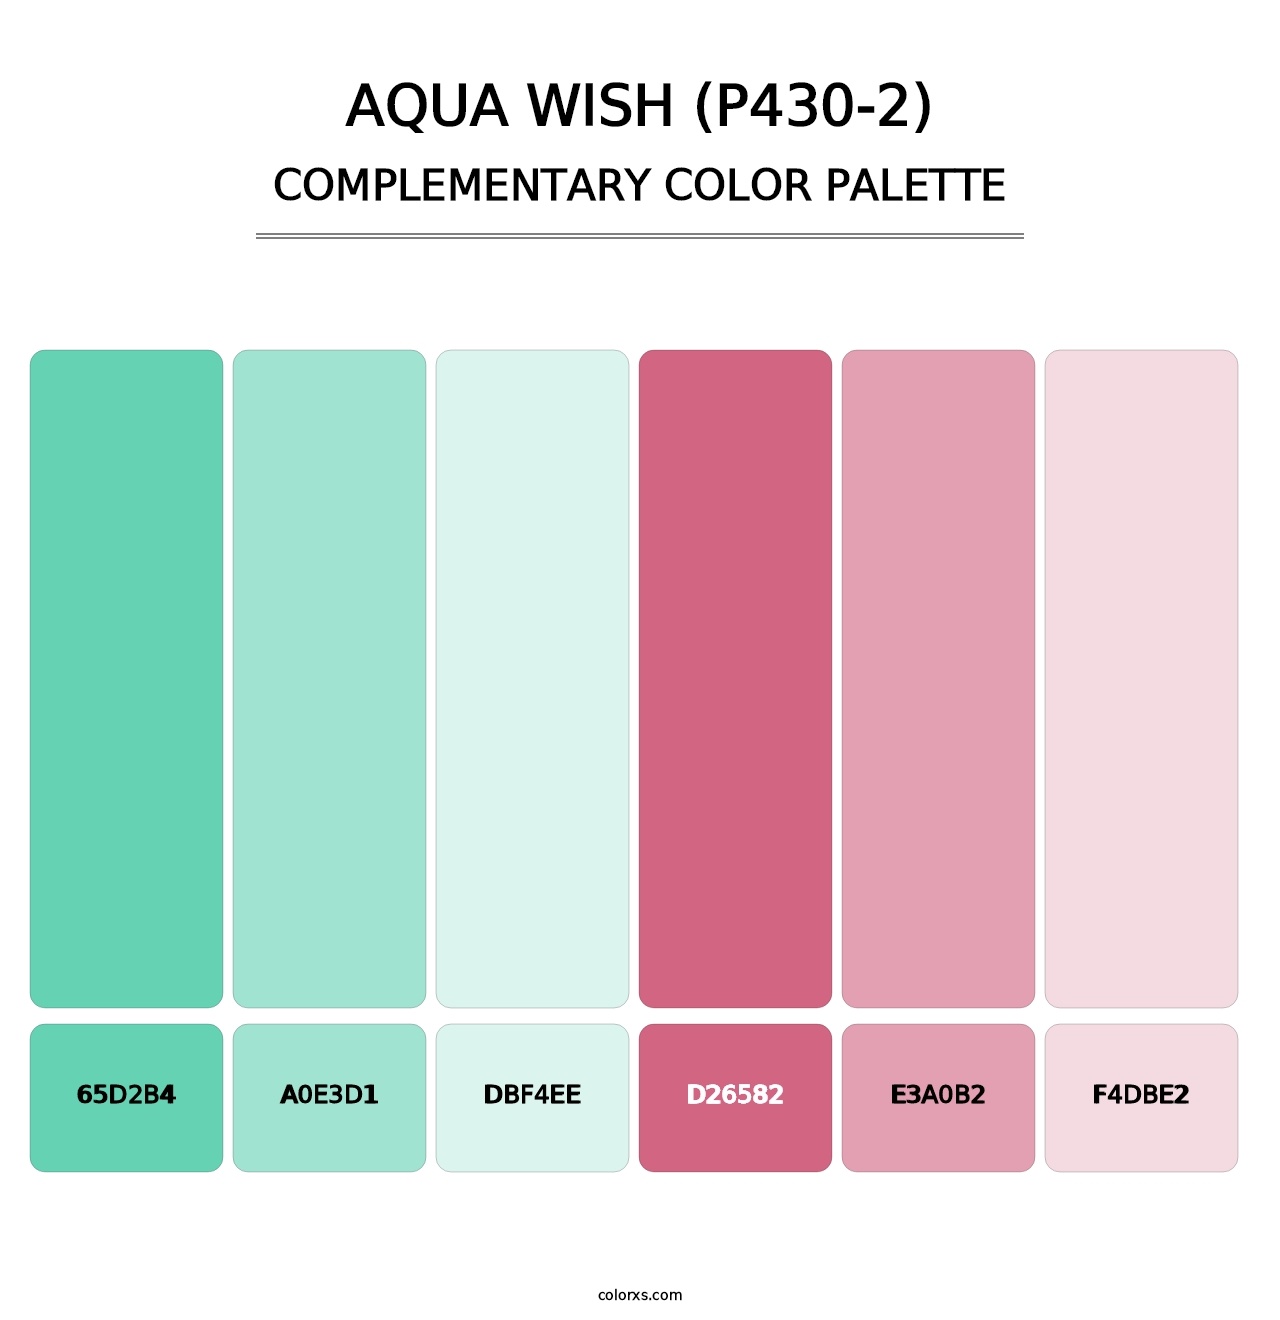 Aqua Wish (P430-2) - Complementary Color Palette